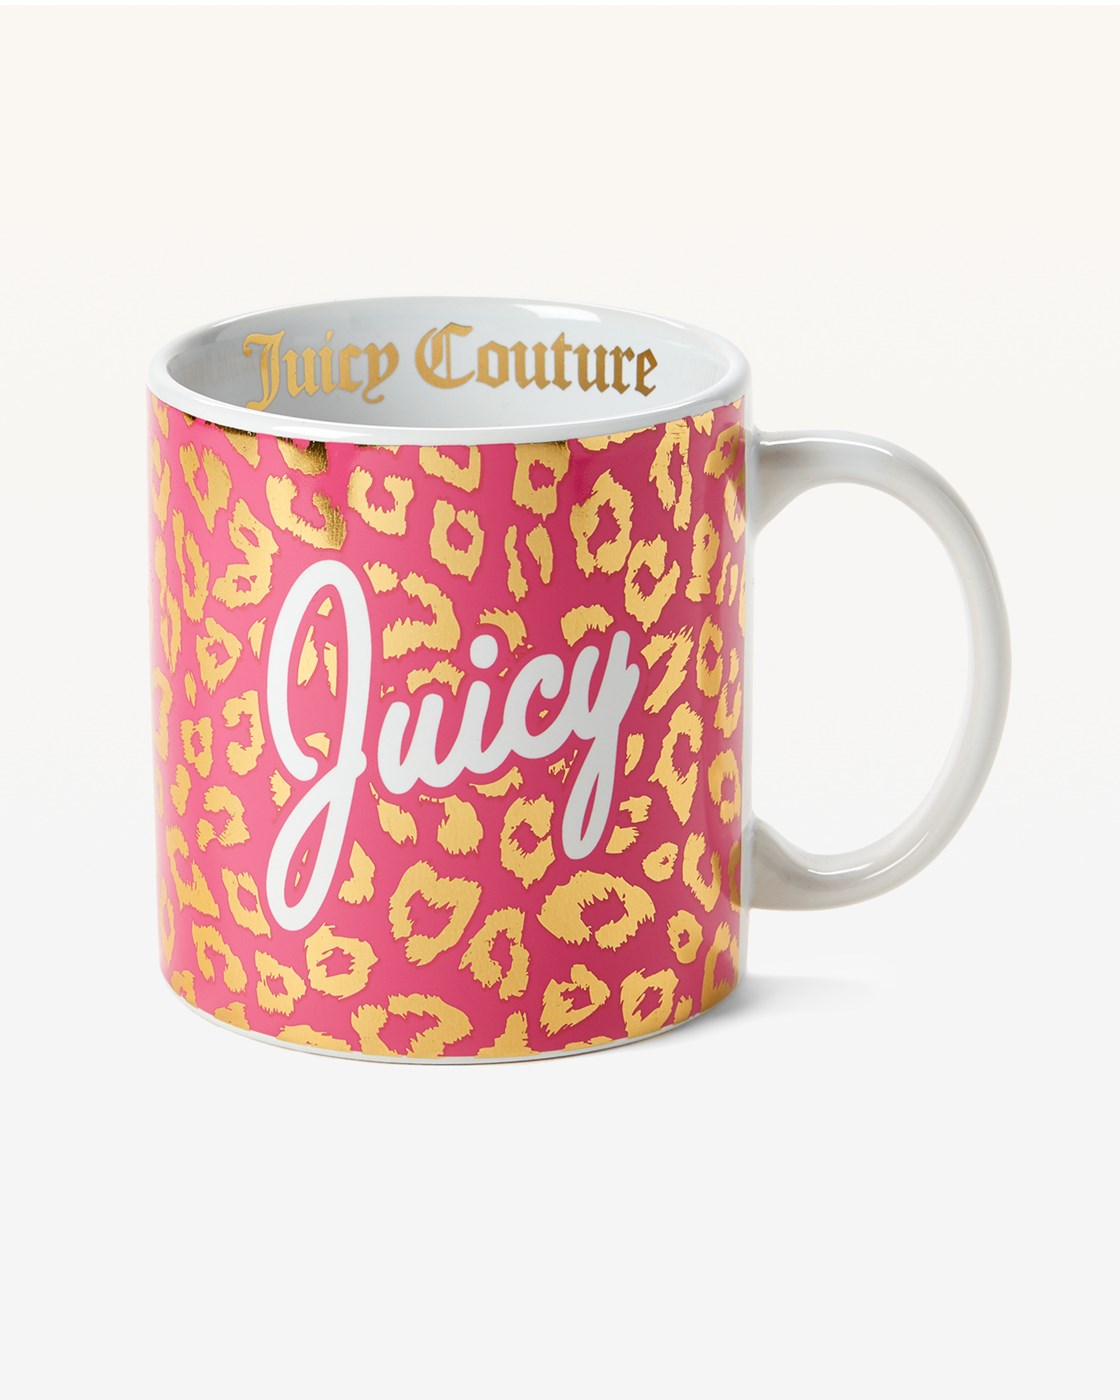 Juicy Couture Pink & Gold Cheetah Ceramic Jumbo Mug